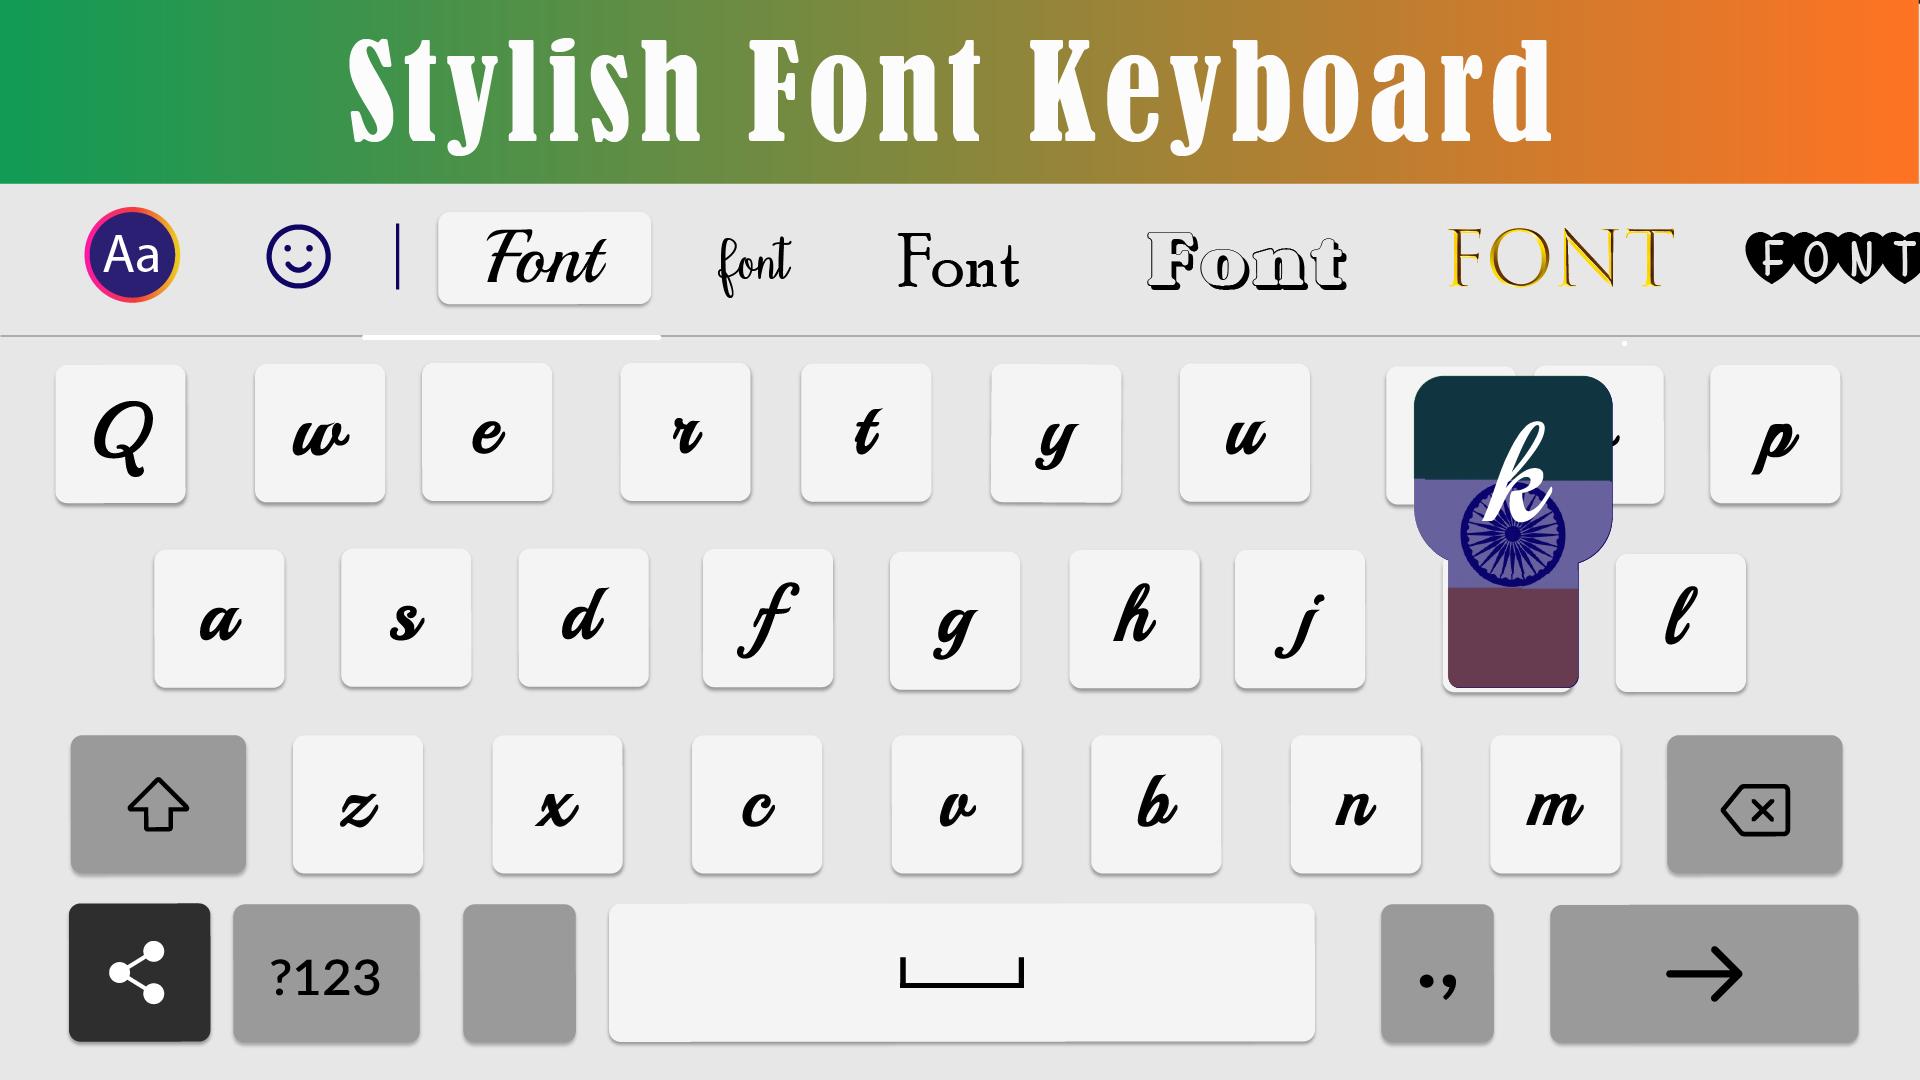 Красивый шрифт для клавиатуры. Шрифт на клавиатуре. Fonts Keyboard красивые шрифты для клавиатуры. Цветной клавиатура шрифт. Klavitura Shirft logo.